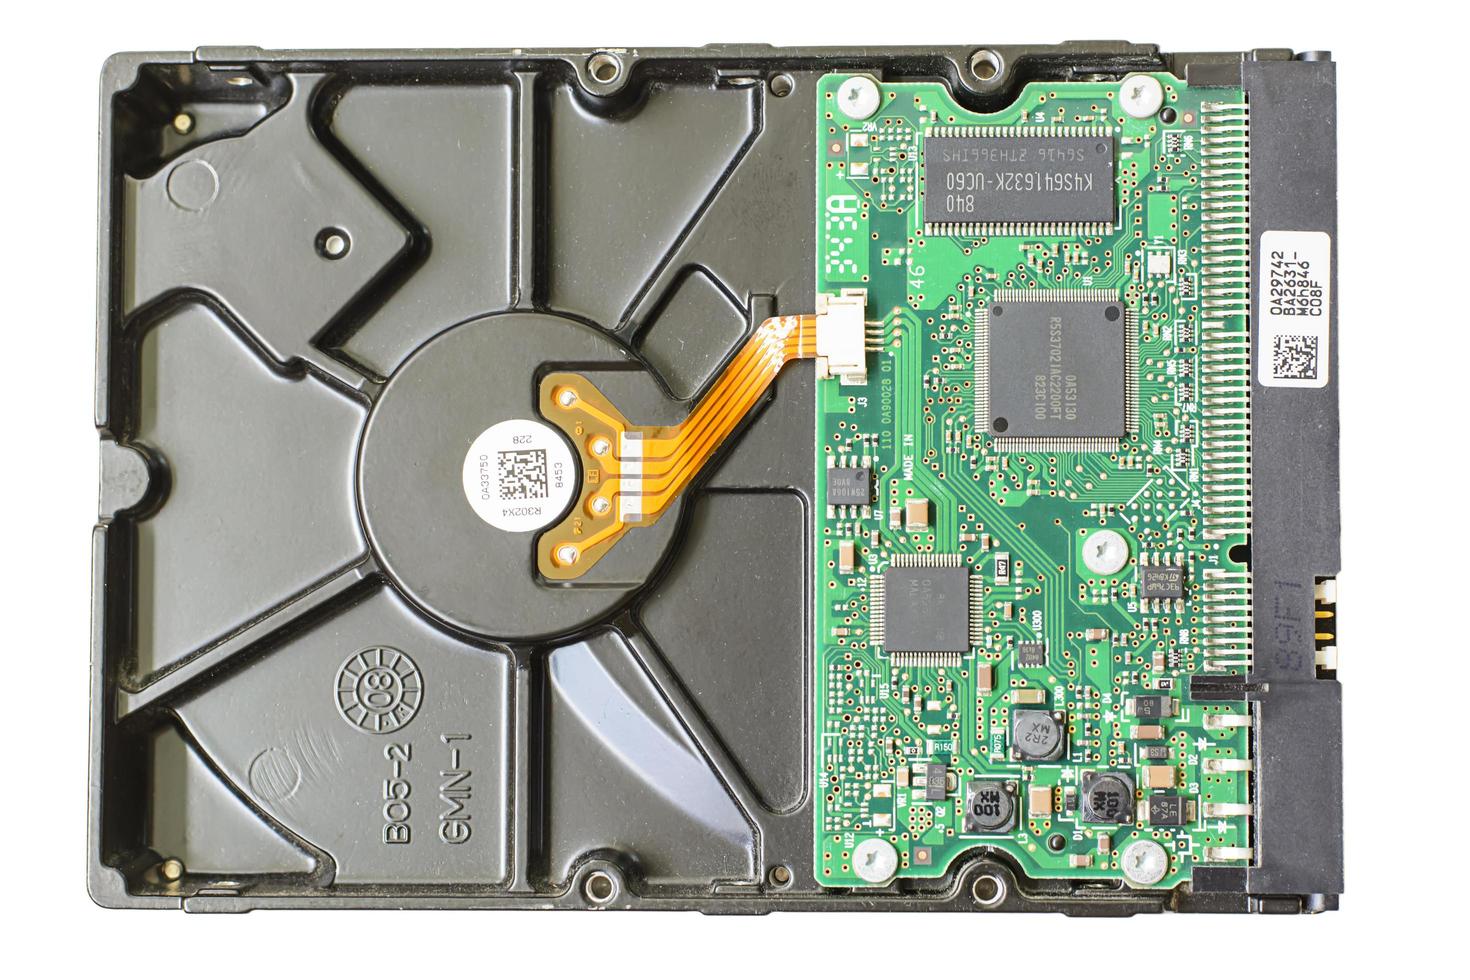 The SATA harddisk drive on white background photo